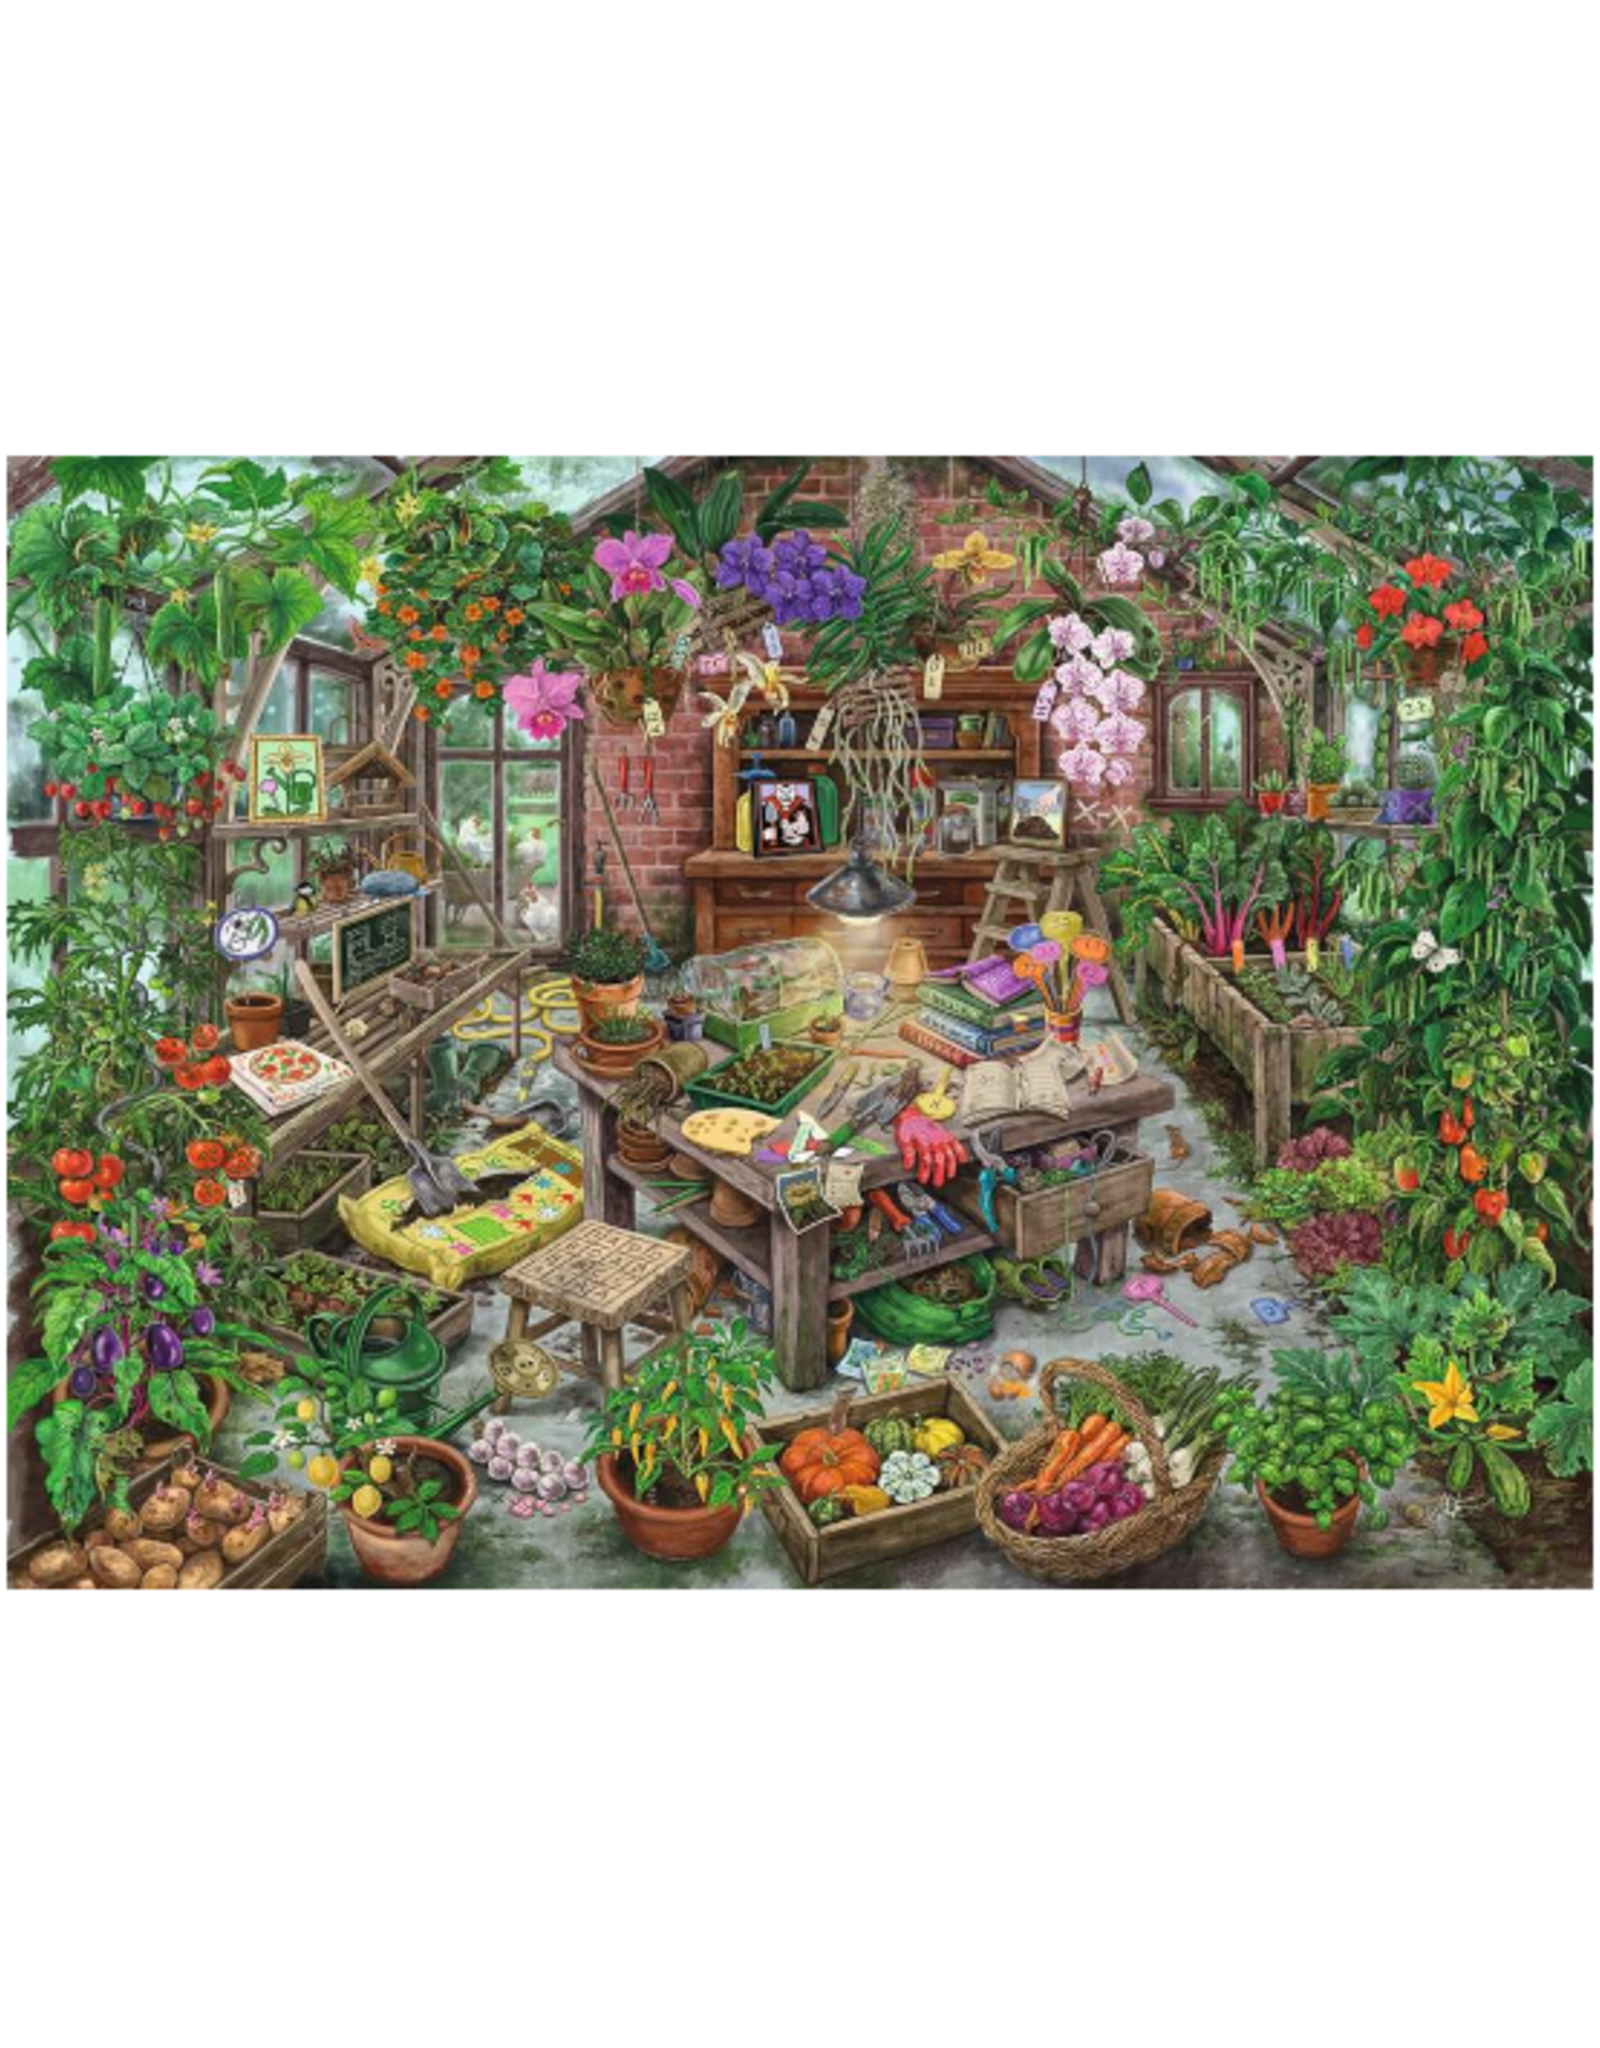 Ravensburger Ravensburger - 368pcs - Escape Puzzle - The Cursed Green House